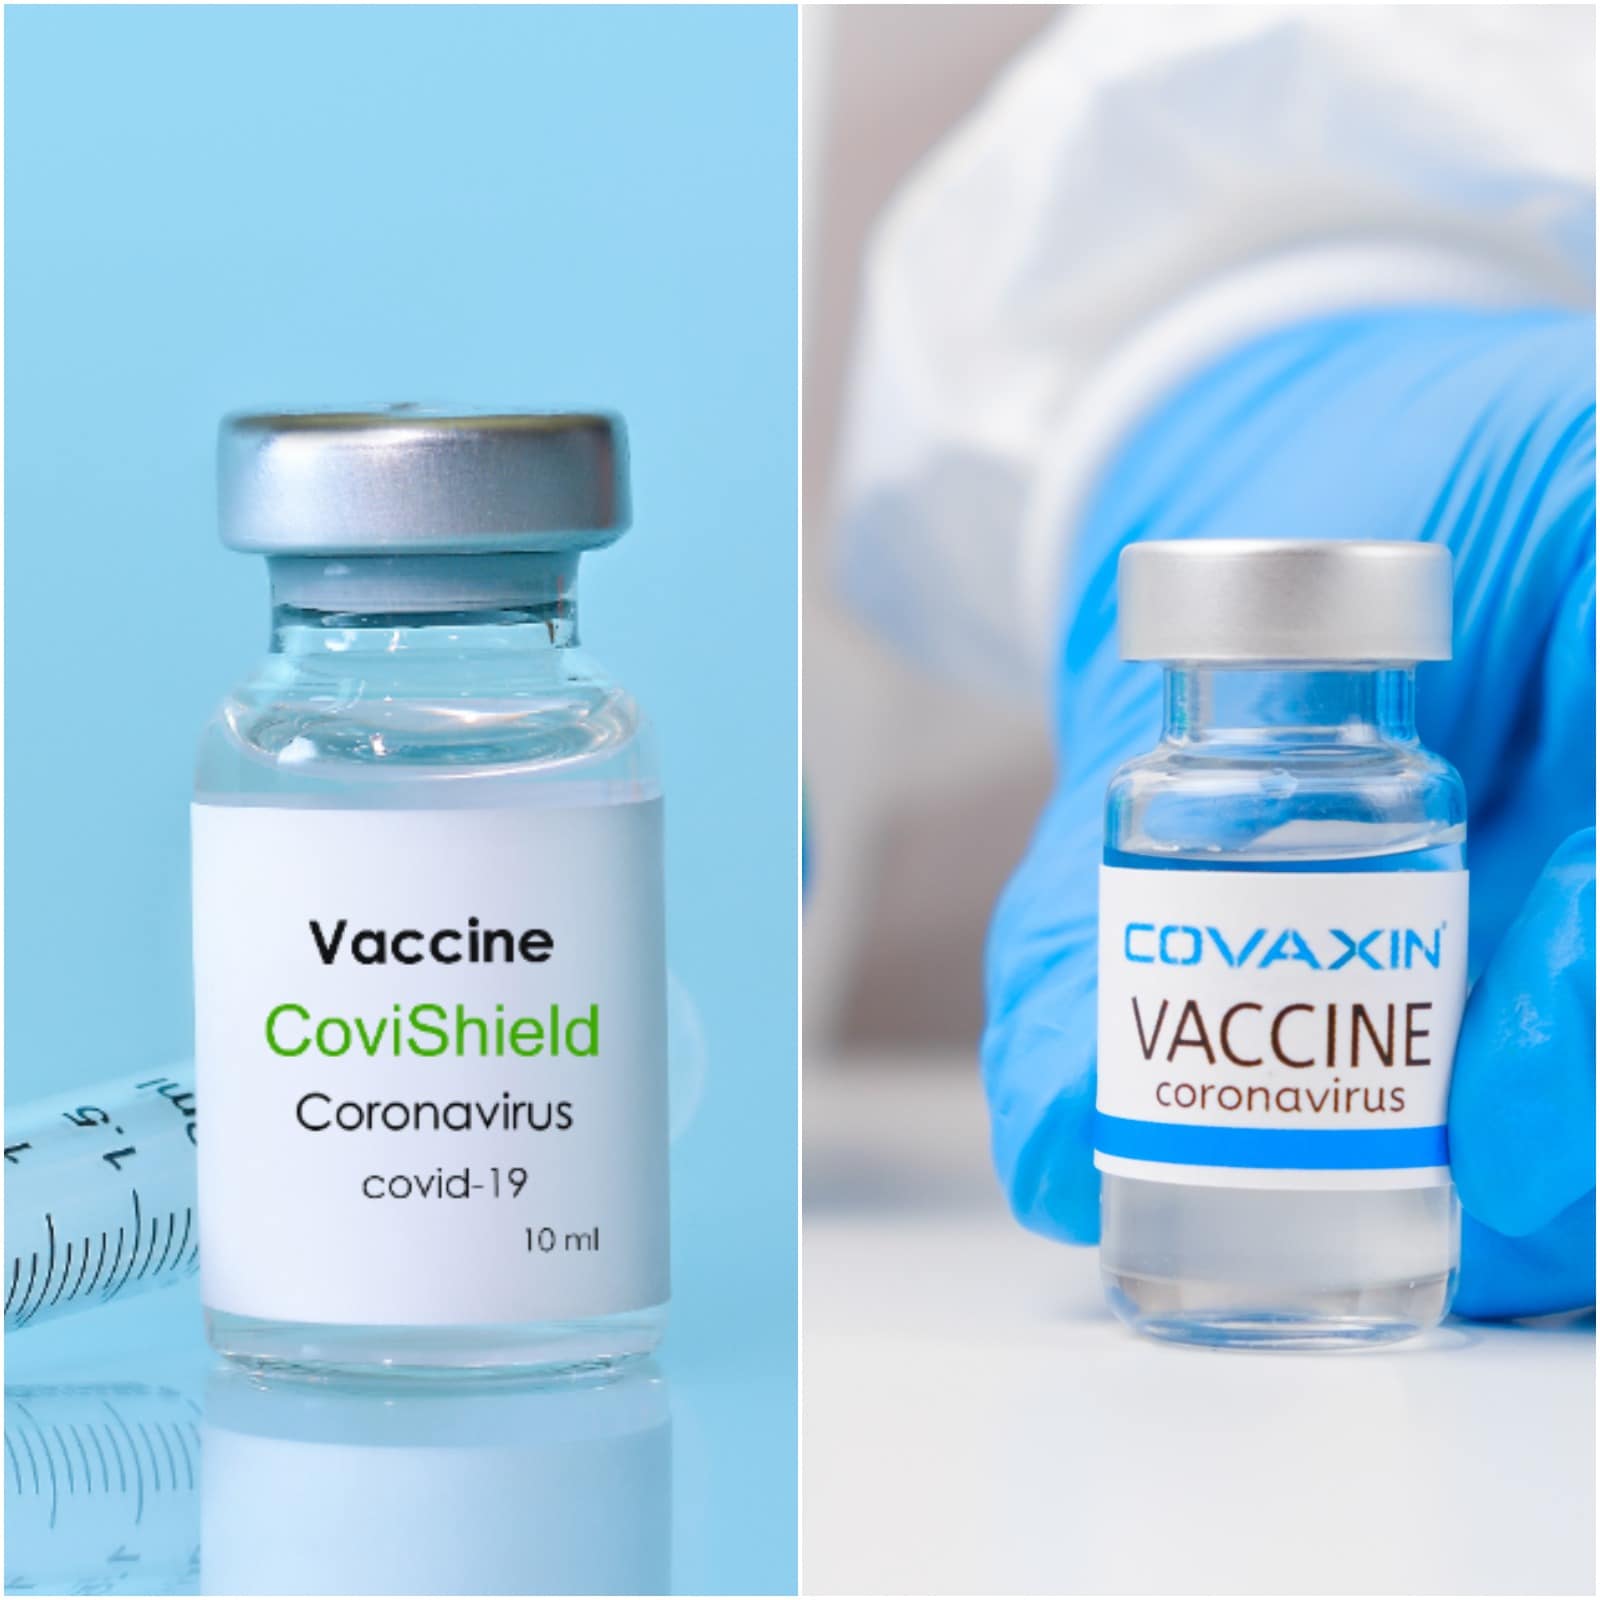 Blending Covaxin and Covishield immunizations